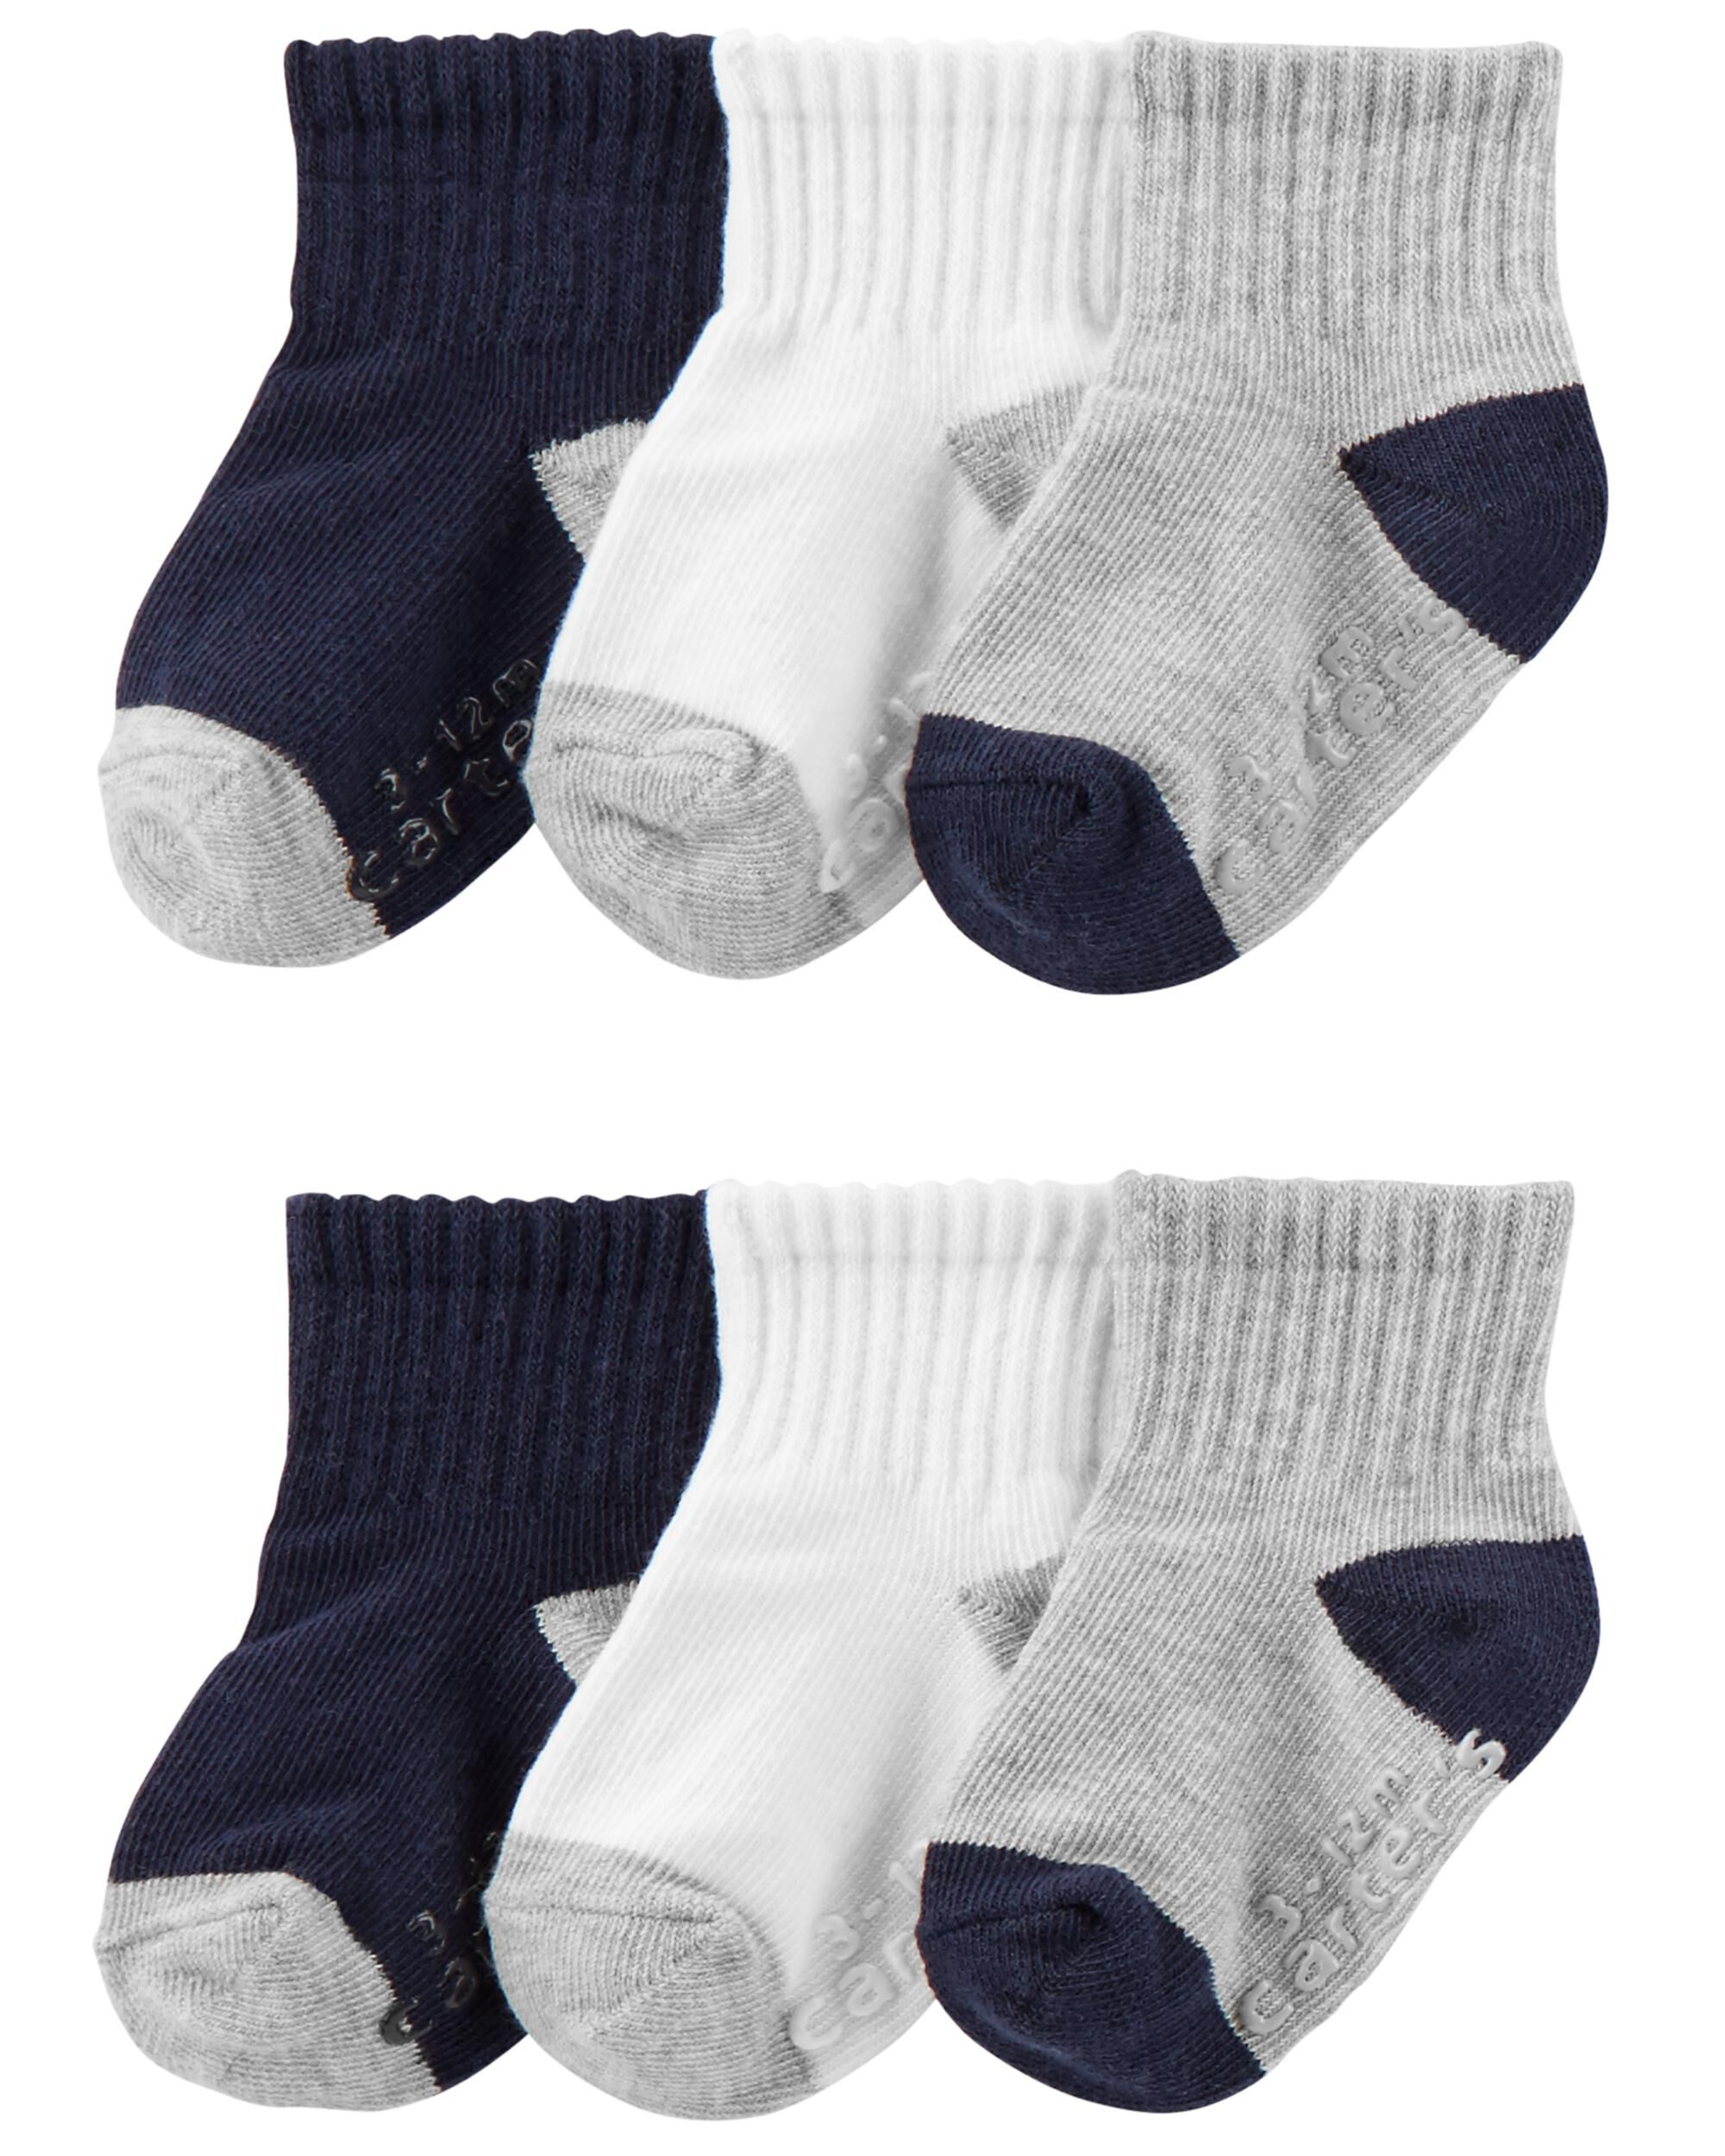 Carters Socks Size Chart